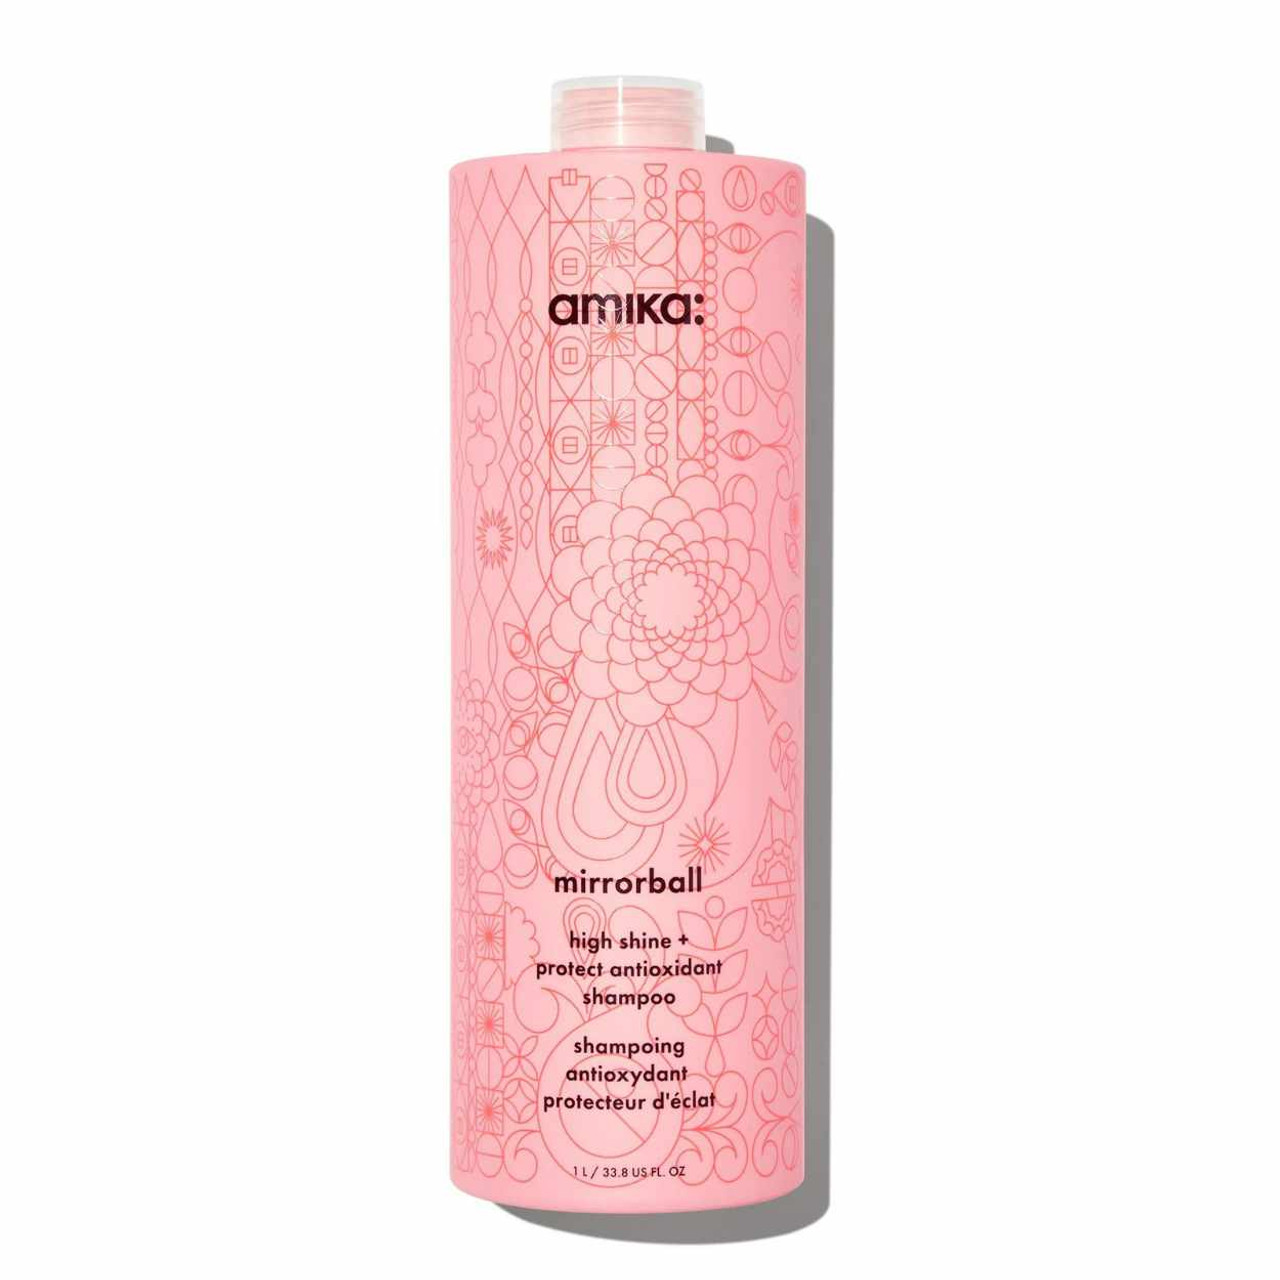 Mirrorball High Shine + Protect Antioxidant Shampoo - 33.8 oz.